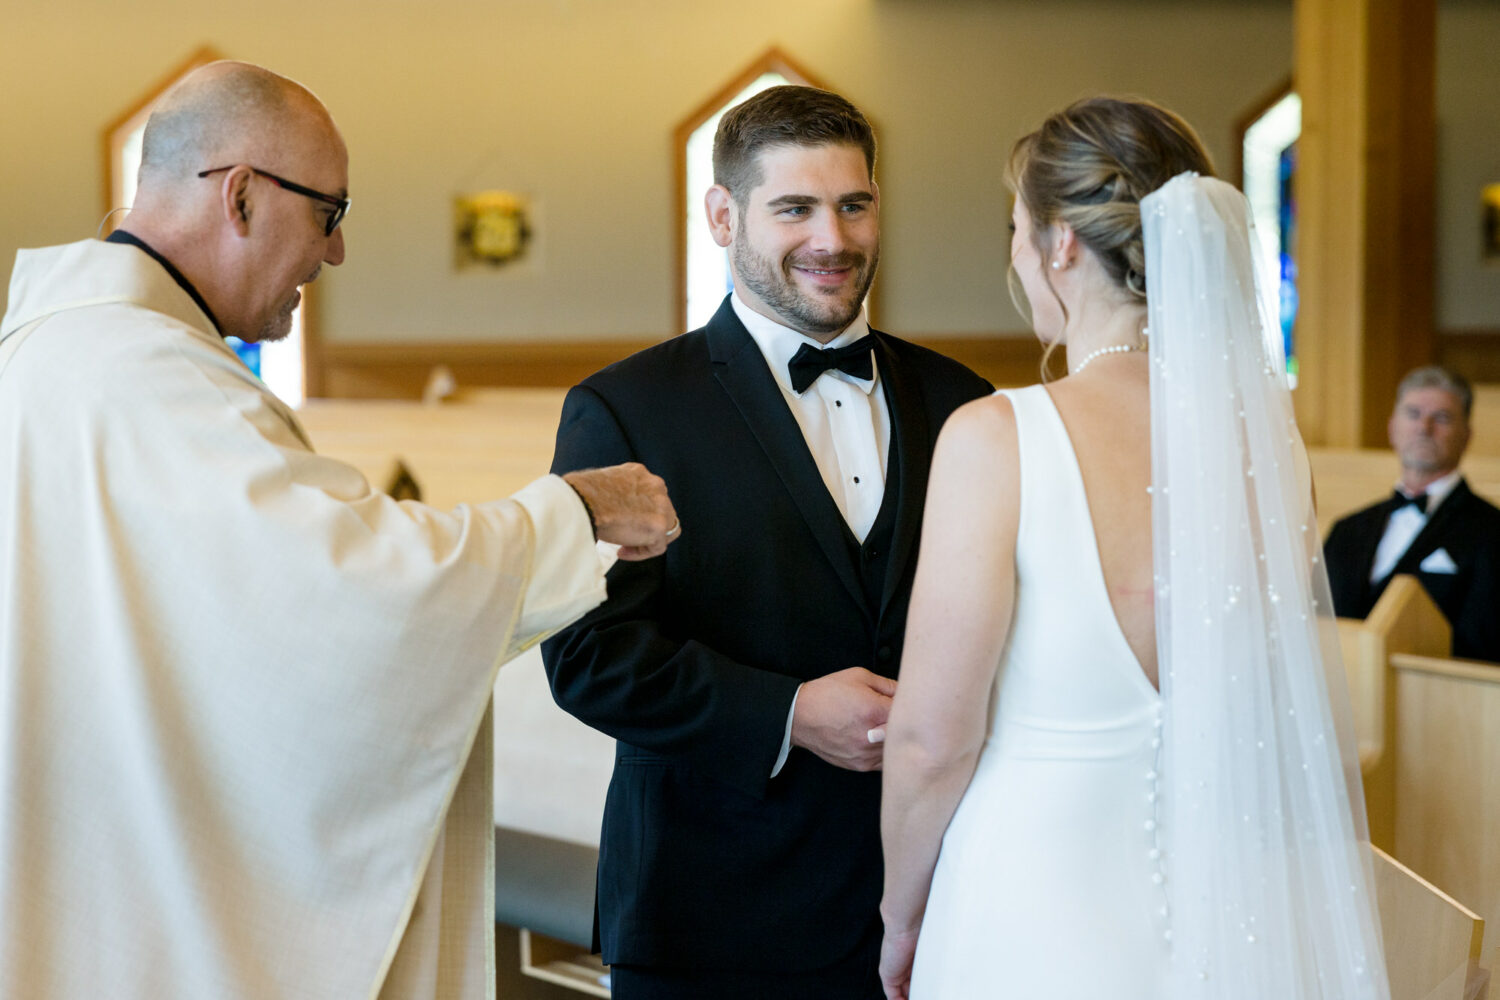 A groom and groom exchange vows at their Catholic Lake Tahoe wedding.